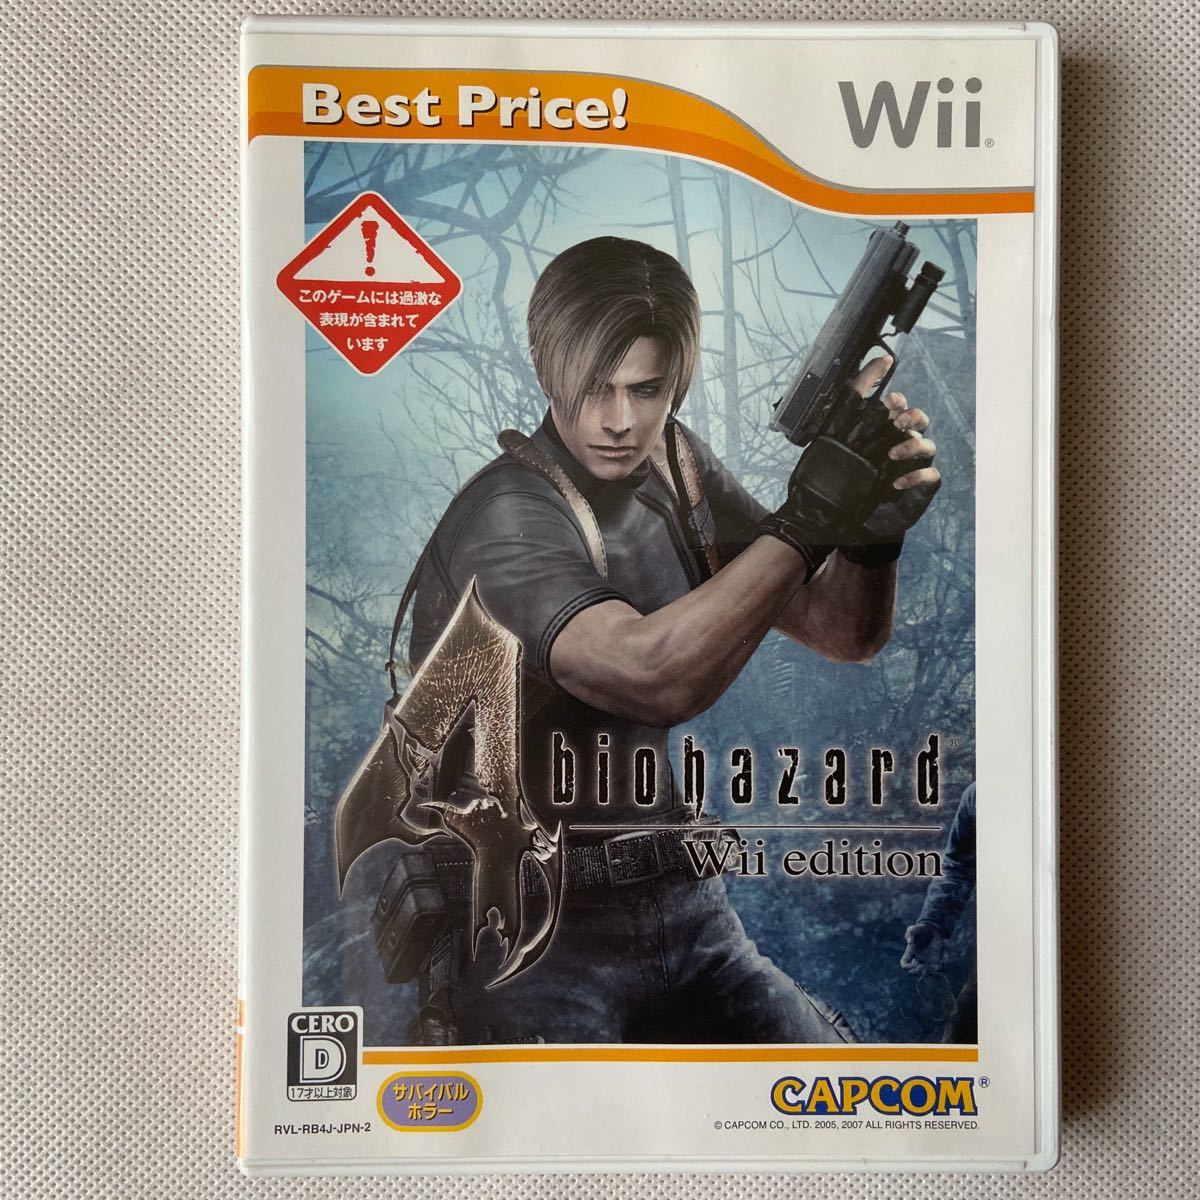 Paypayフリマ Wii バイオハザード4 Wiiエディション Best Price